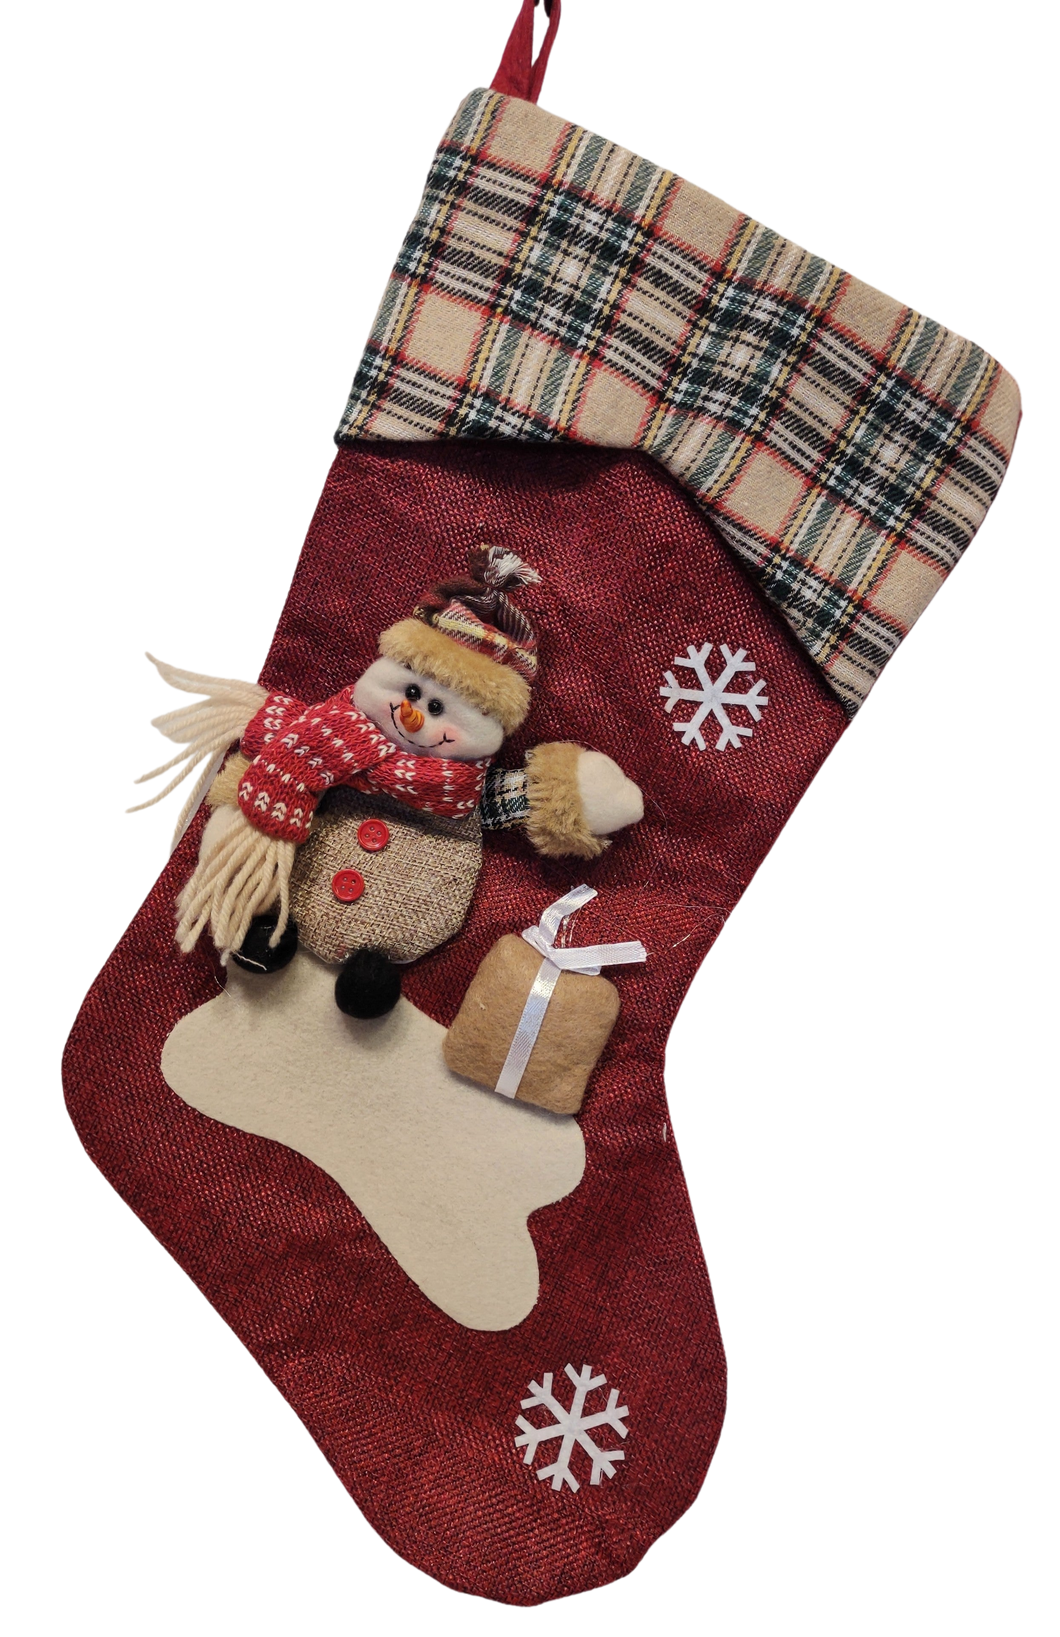 Burlap Christmas Stocking with Snowman, Santa or Reindeer Applique